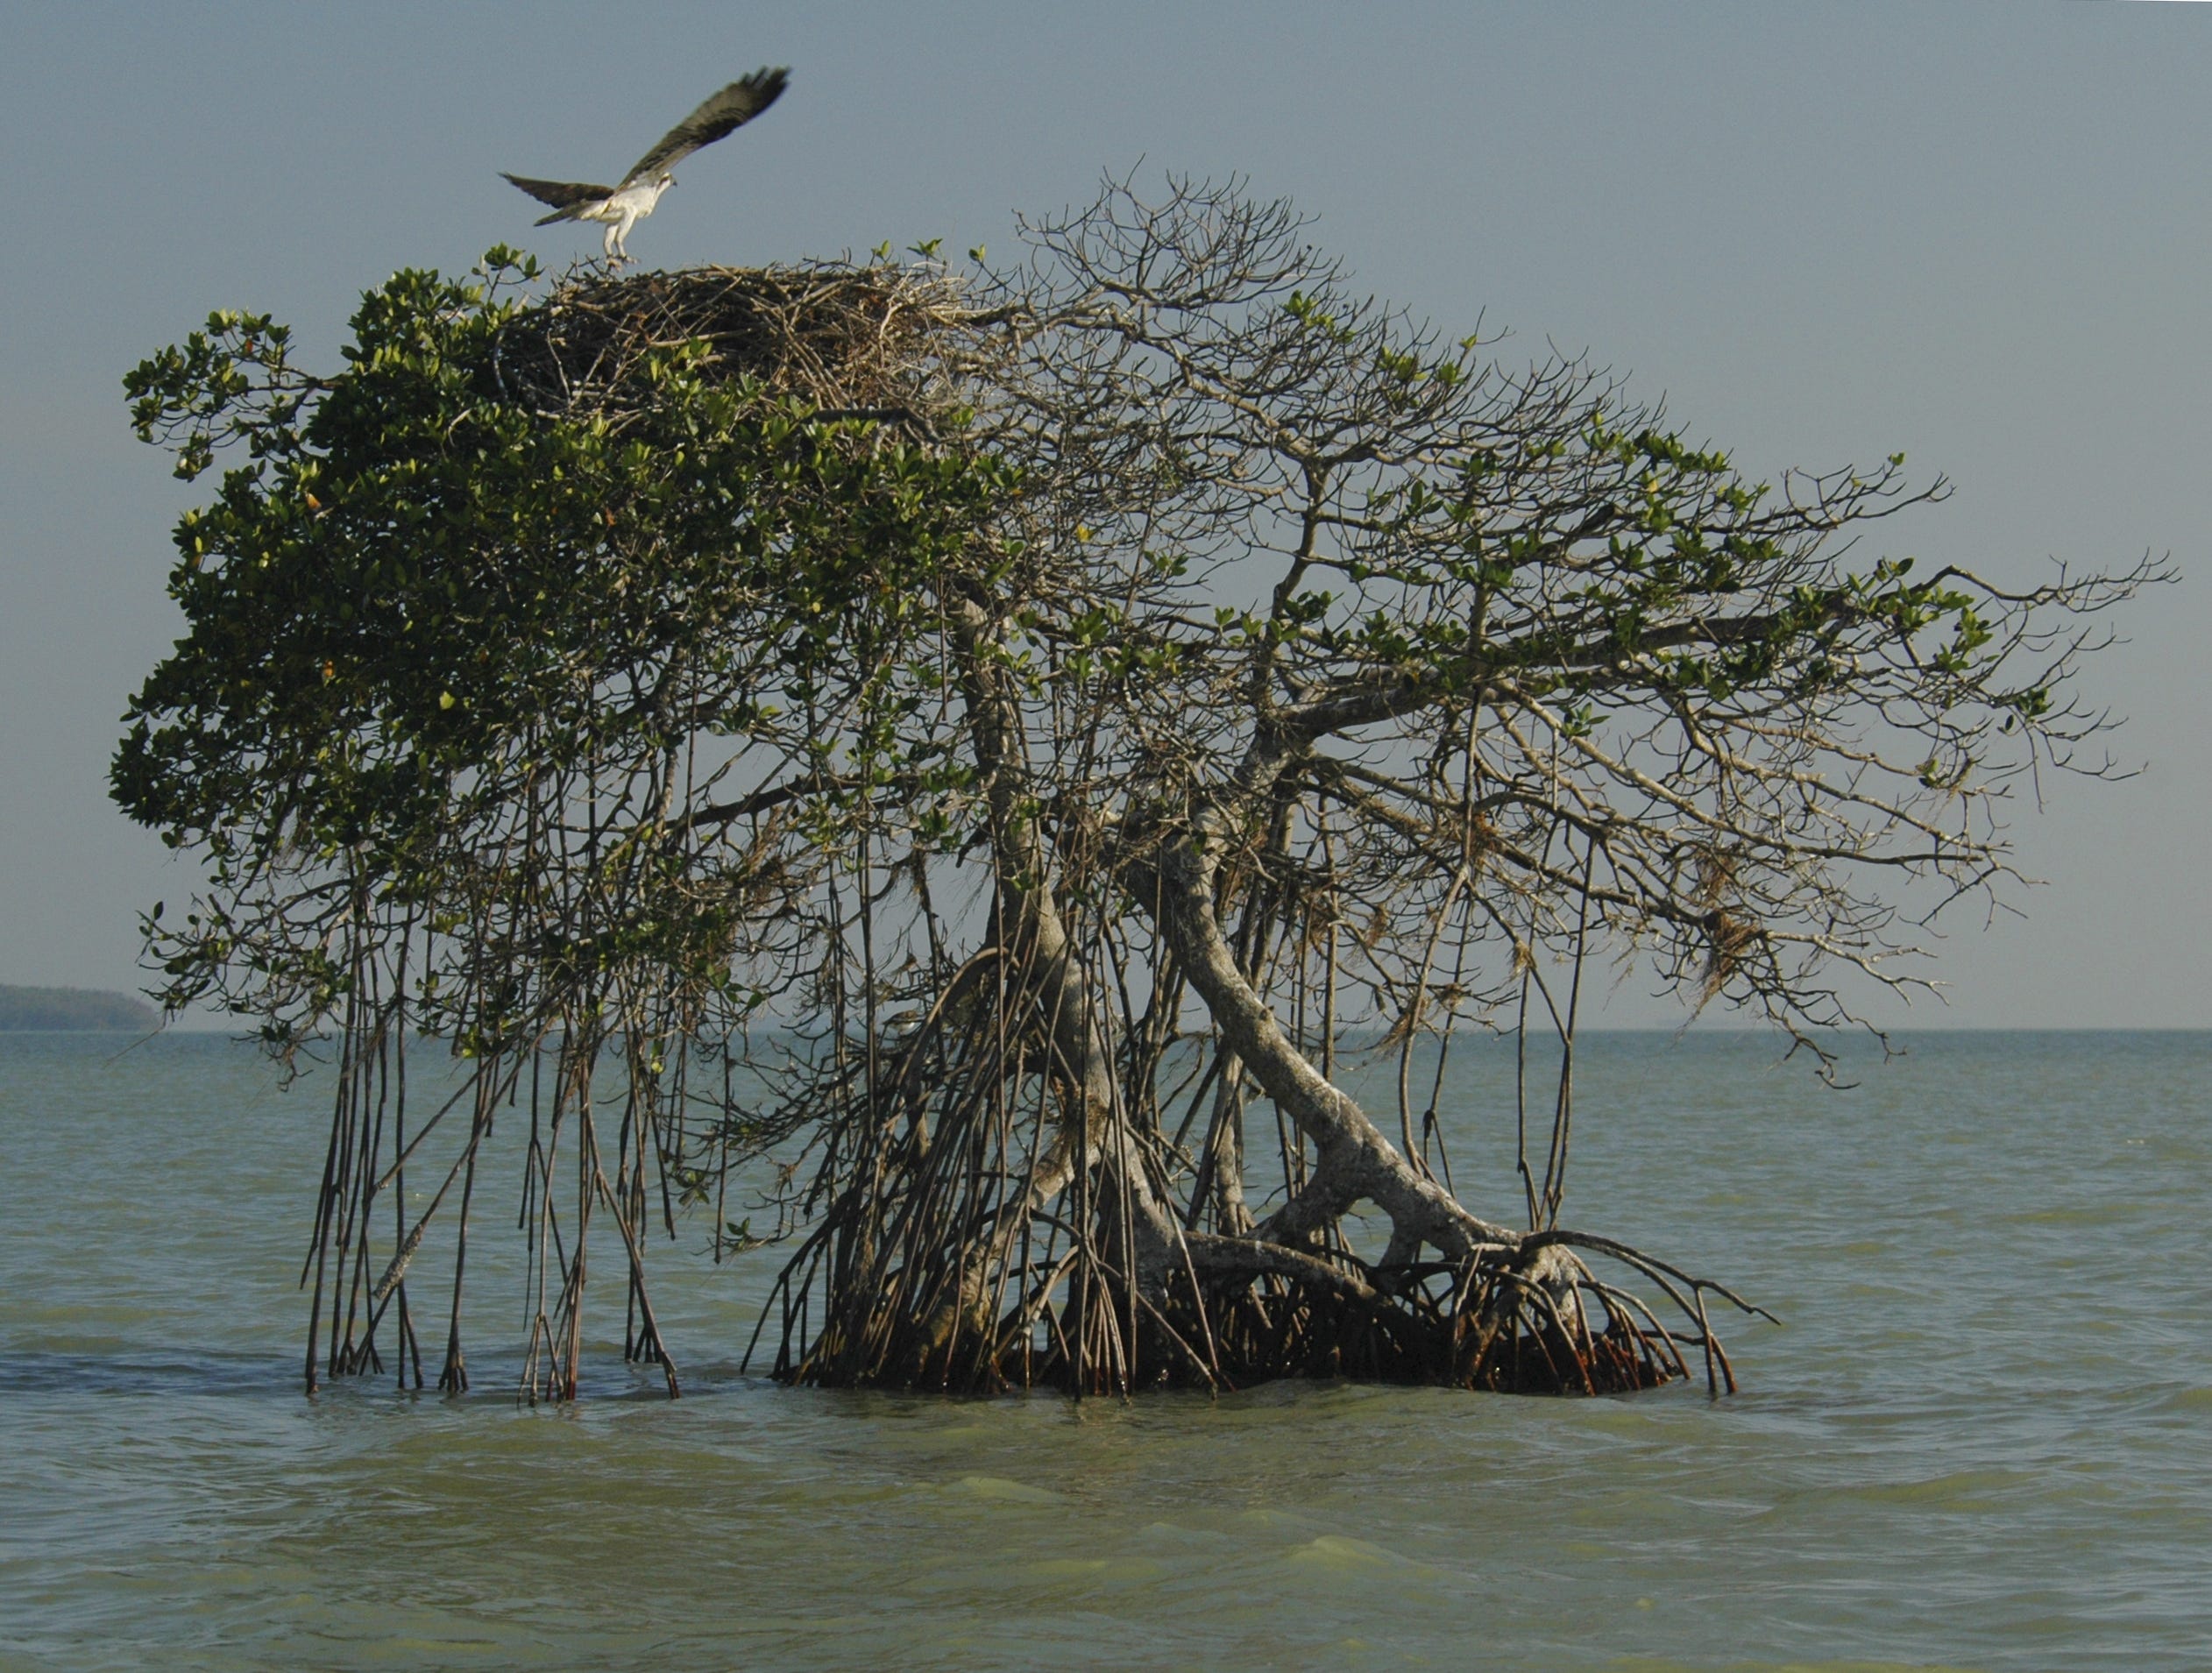 EXTENSION NOTES: Florida mangroves uniquely adapted to coastal habitats